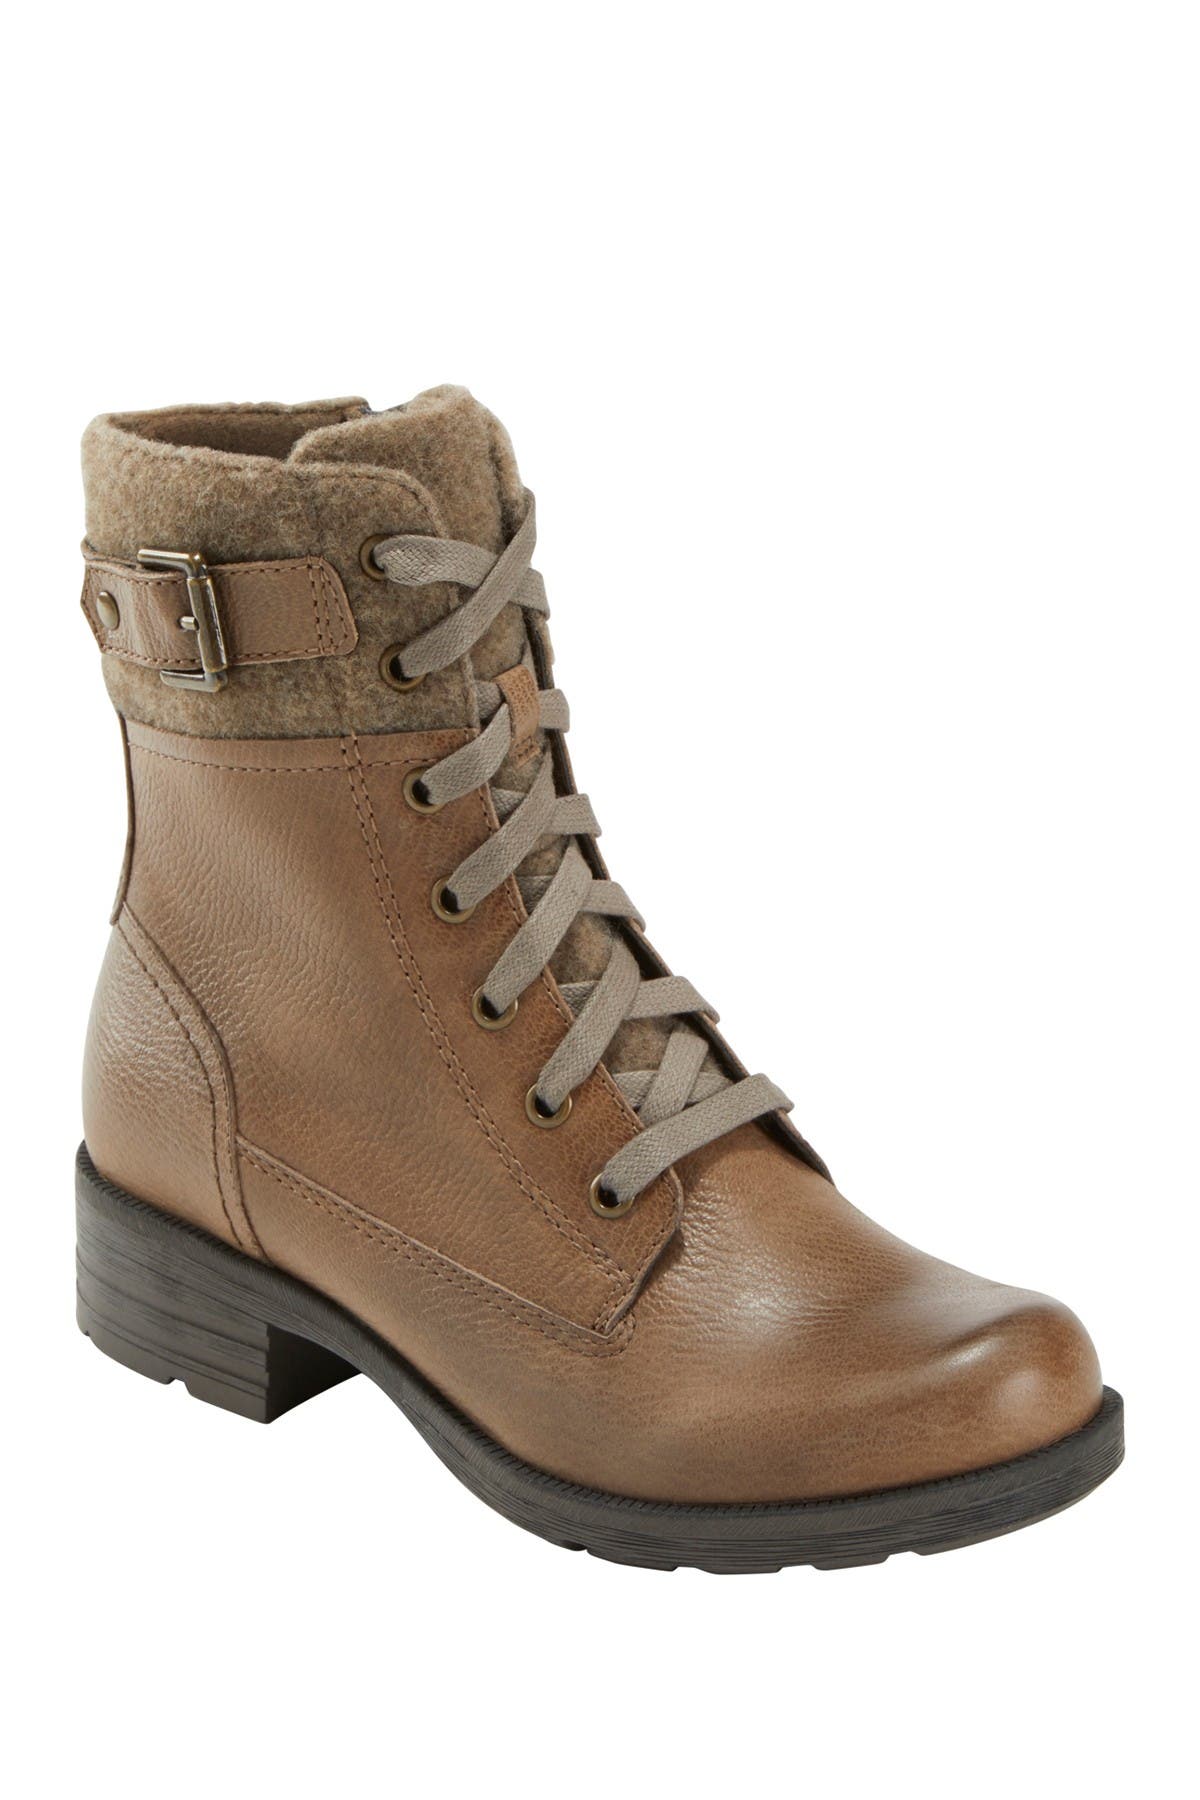 nordstrom wide width boots